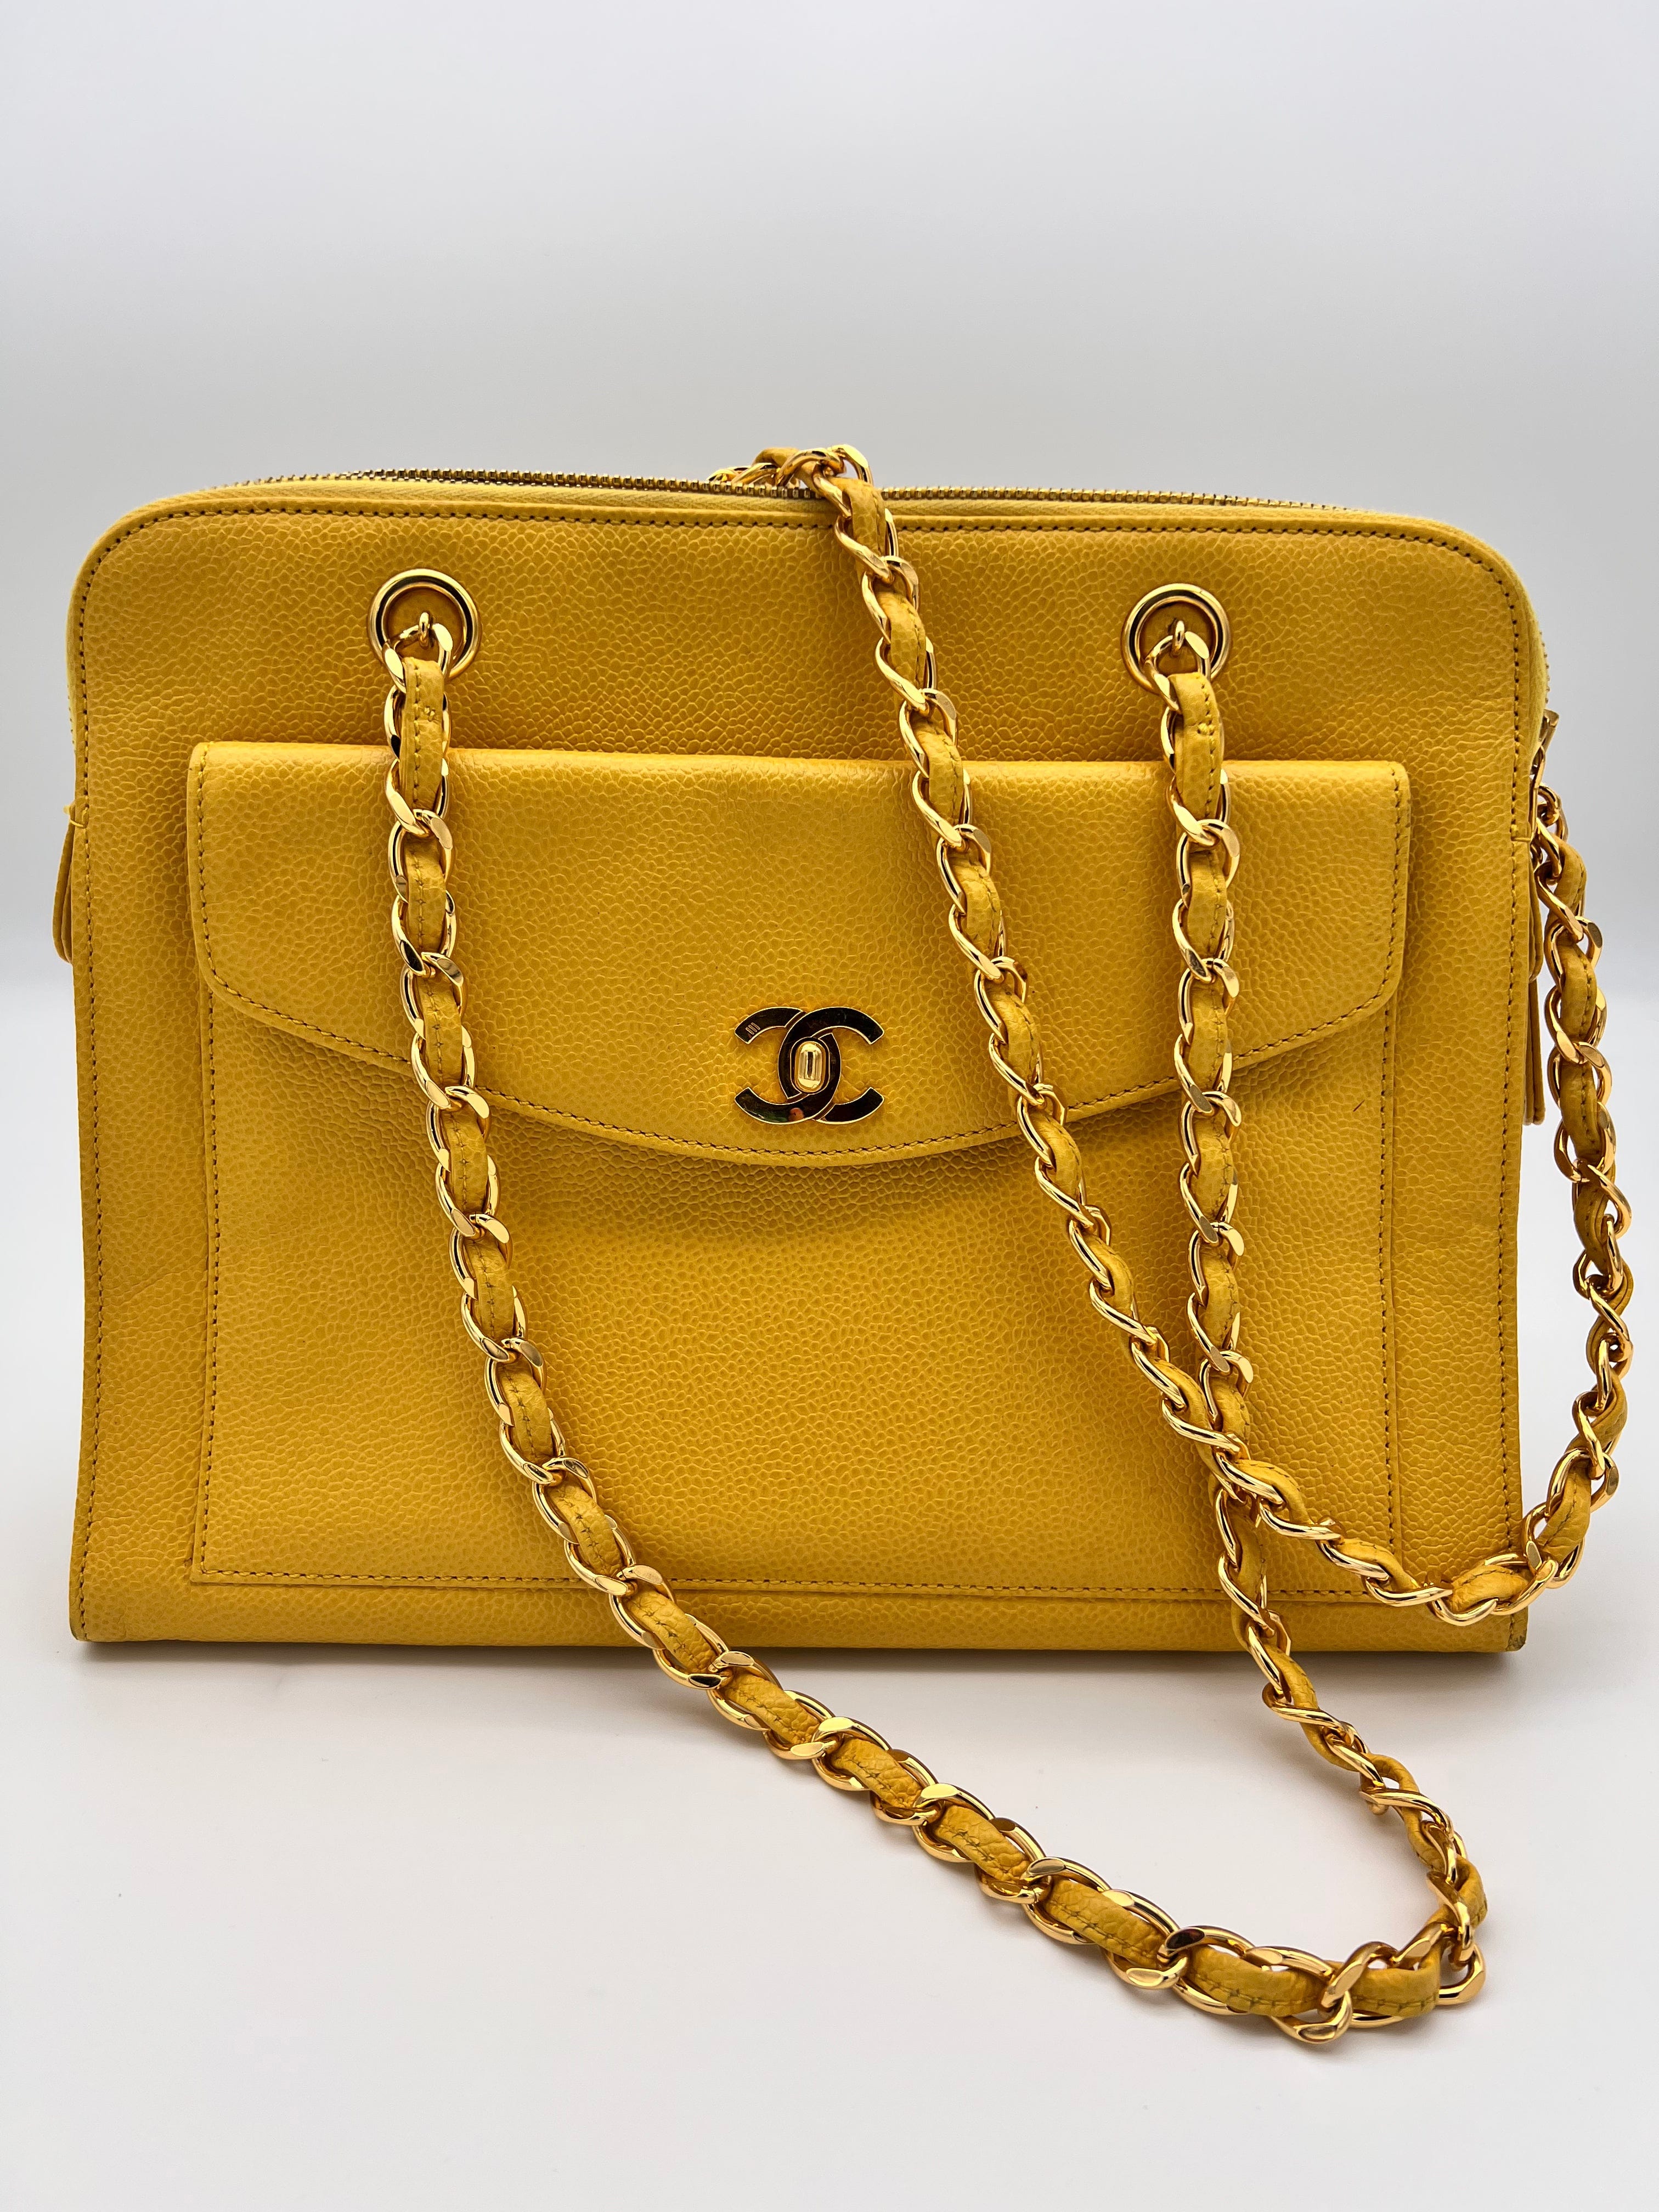 Chanel Chanel Yellow Caviar Pocket Tote